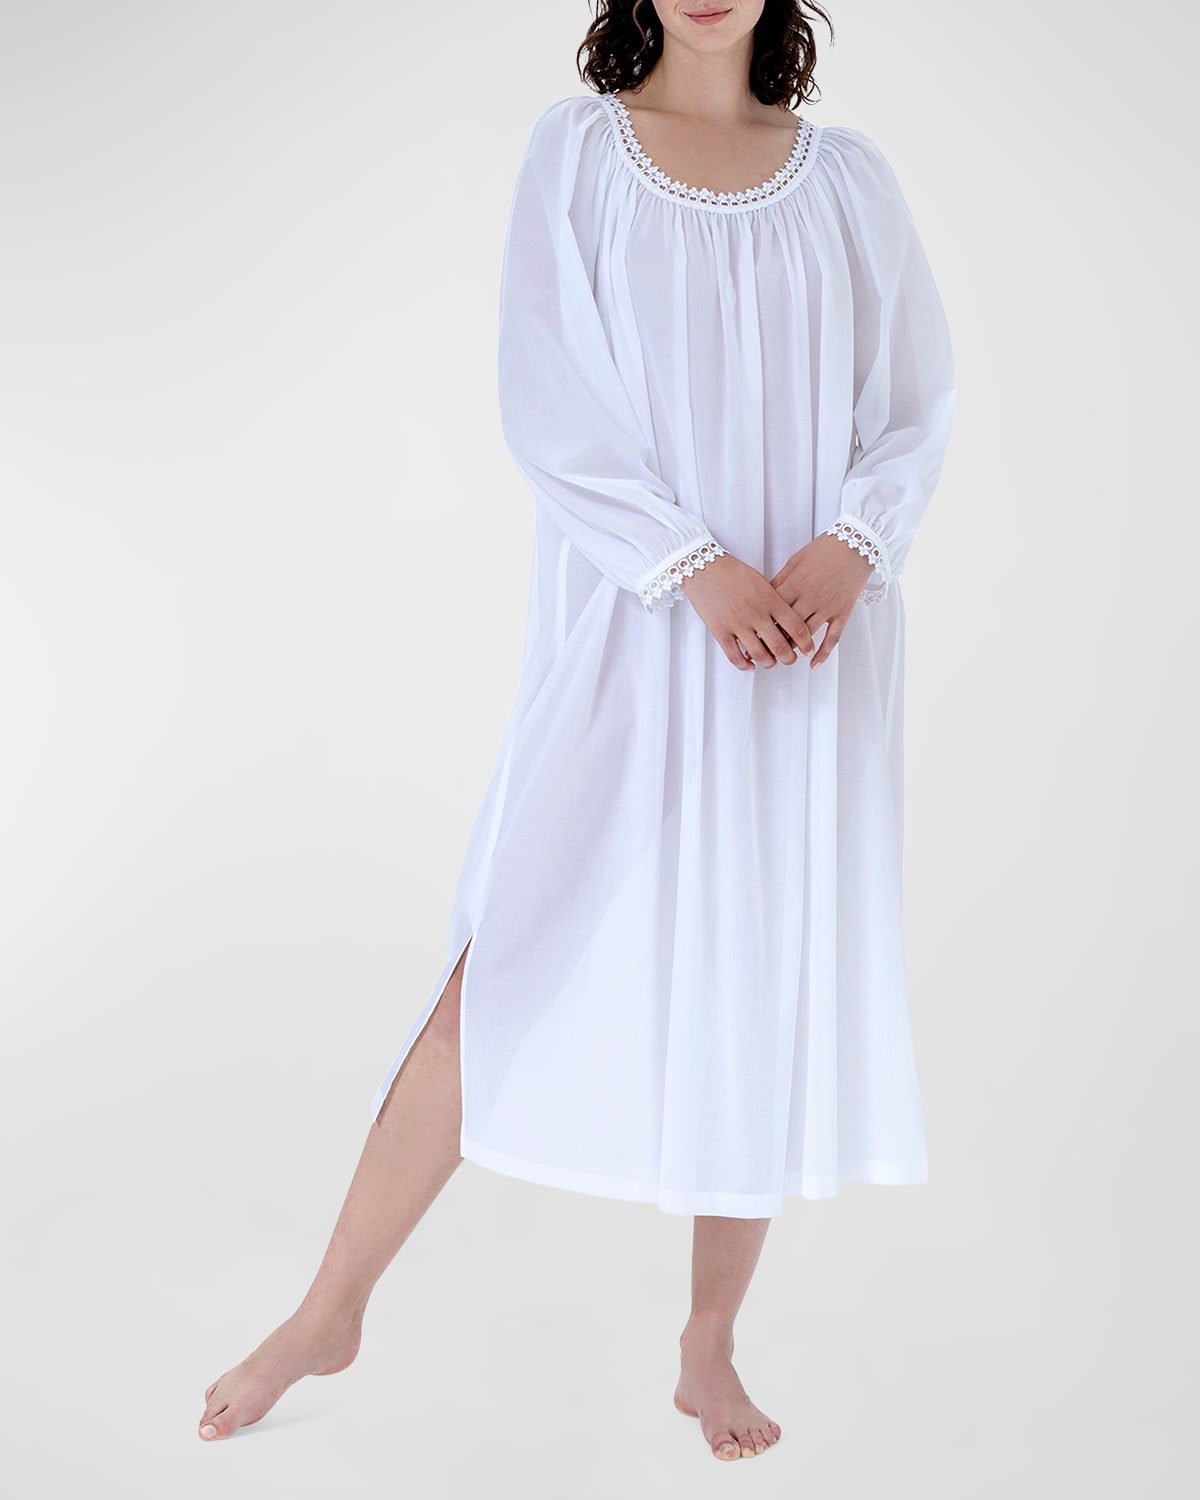 Monica-3 Striped Lace-Trim Cotton Nightgown